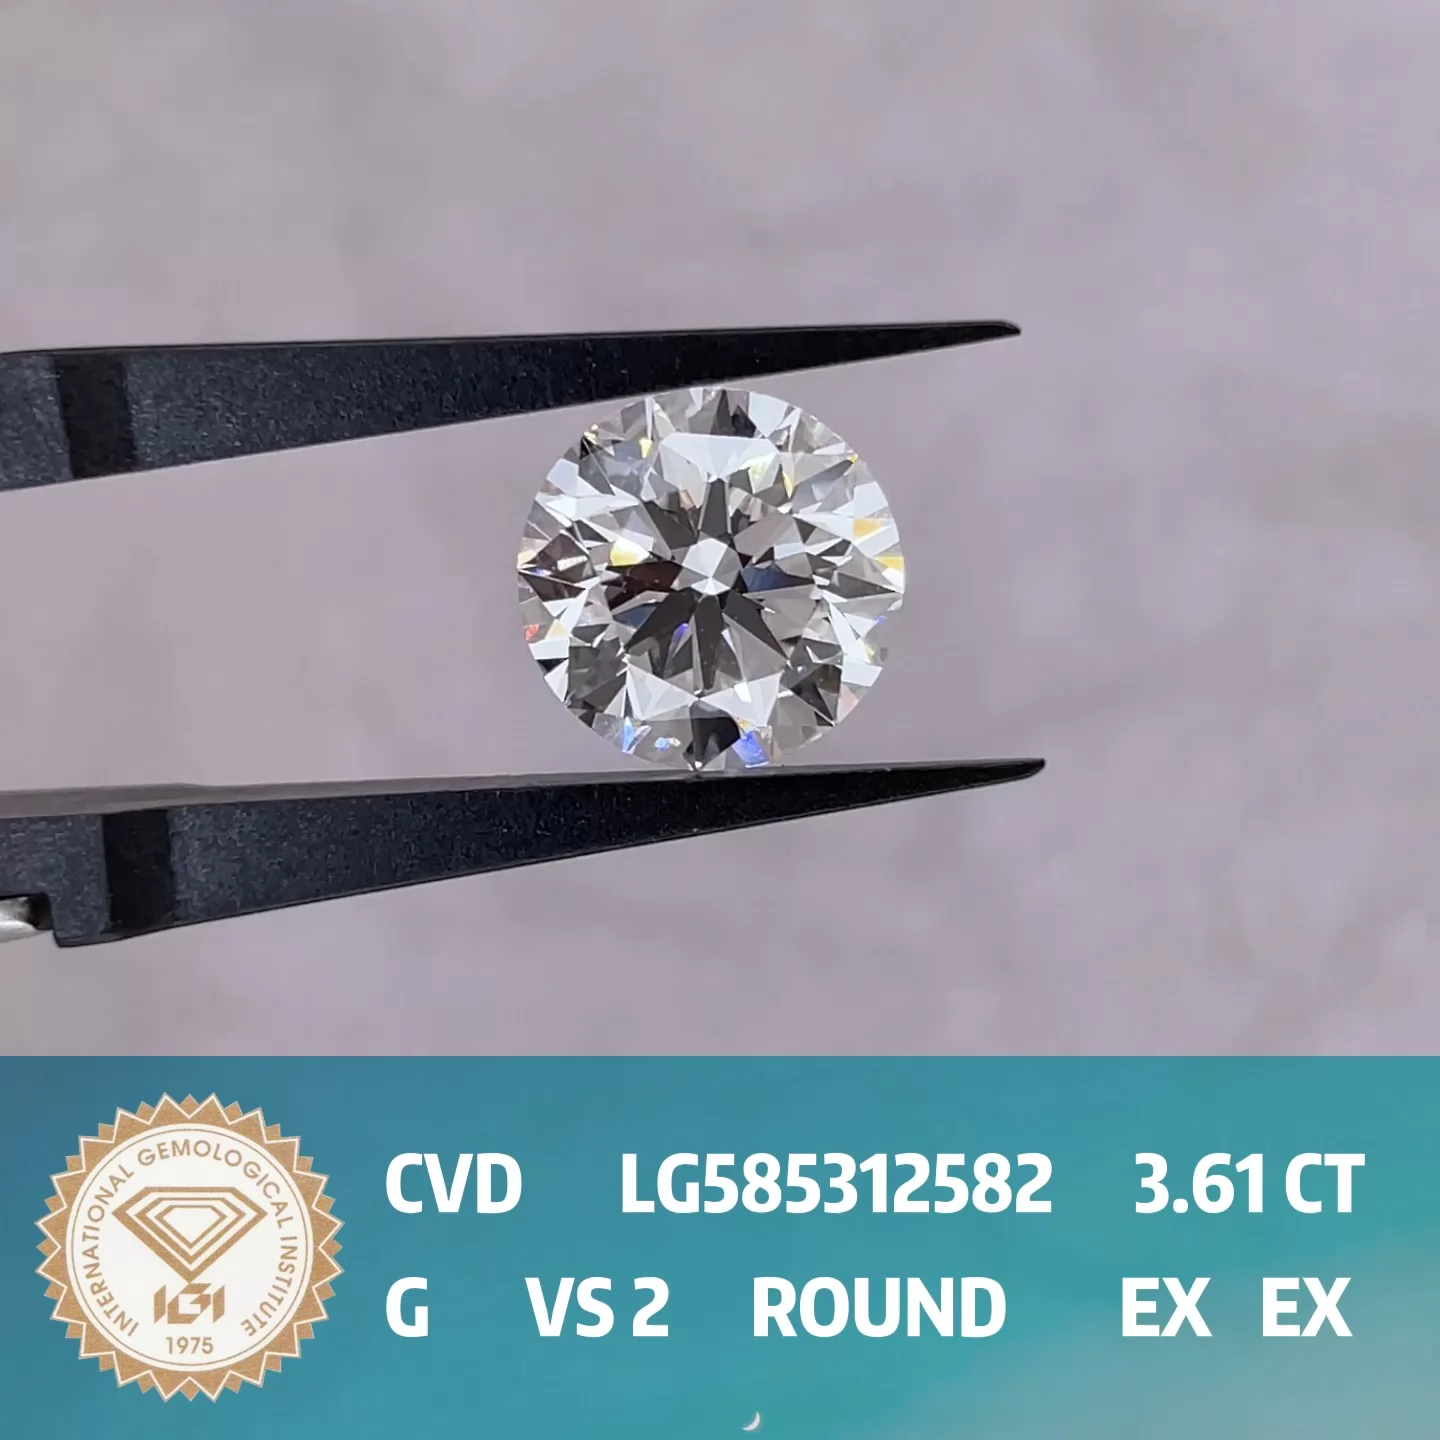 Round Brilliant Cut 3.61ct G Color CVD Lab Grown Diamond